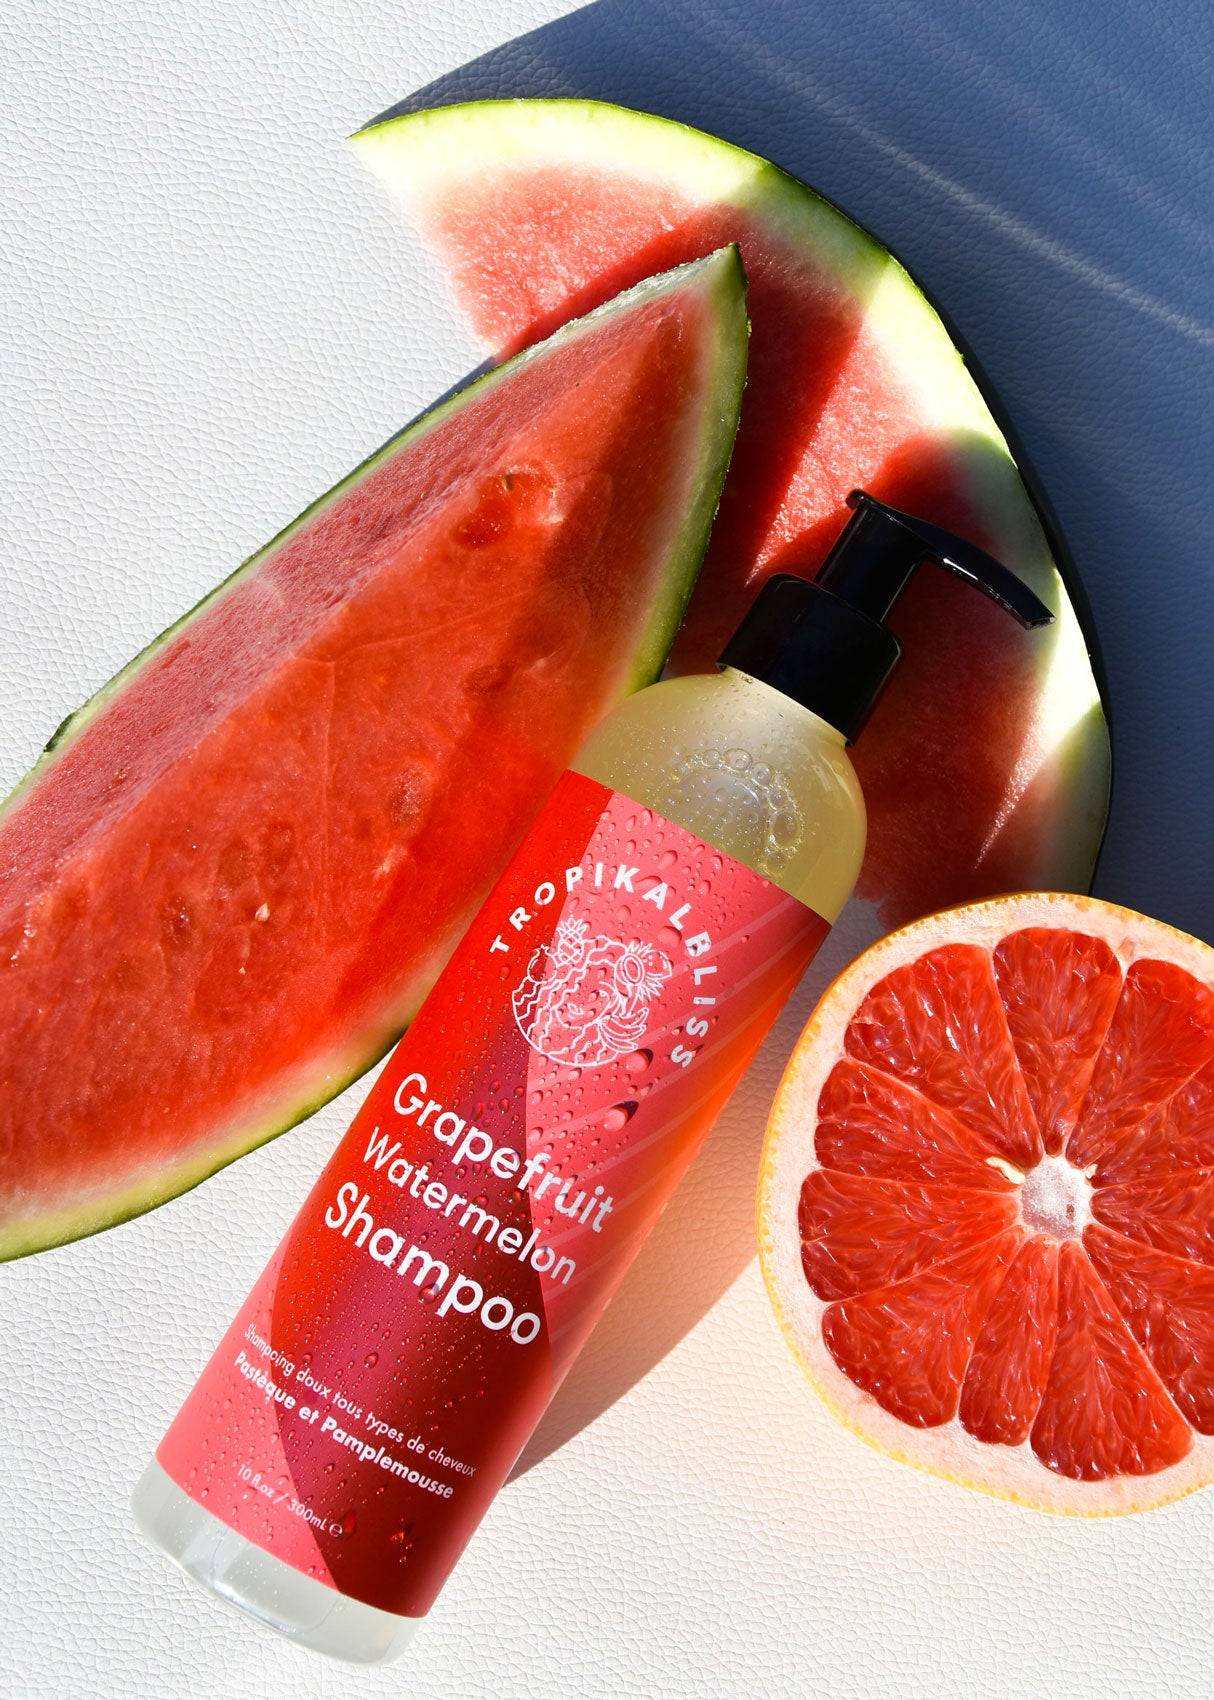 produit: Grapefruit Watermelon Shampoo